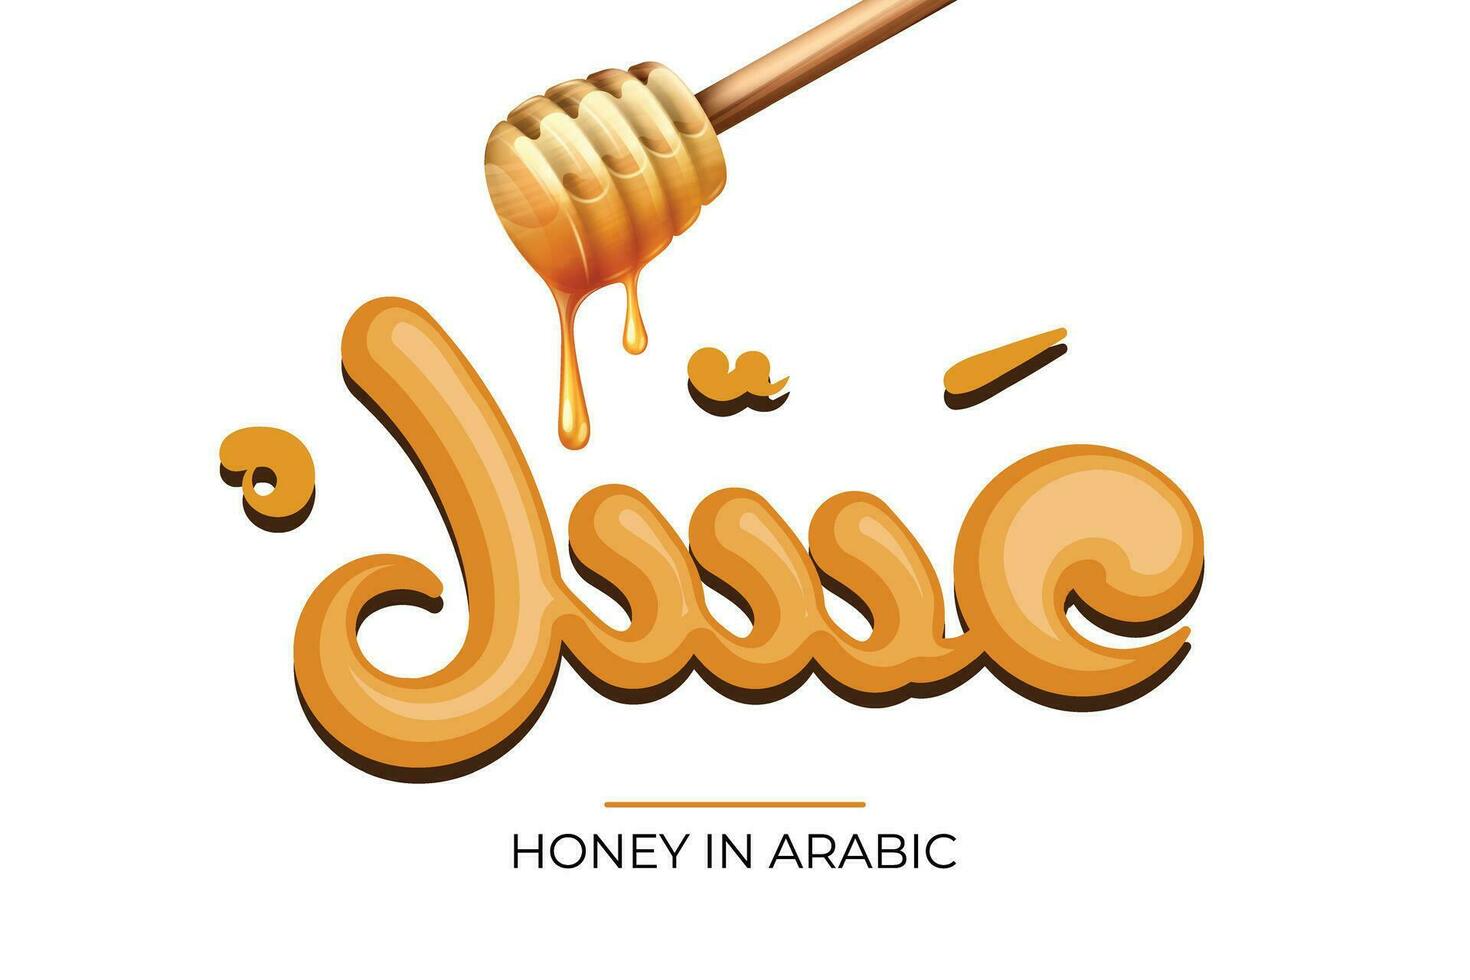 Honey in arabic language handwritten caligraphy freehand font logo design with honey stick vector